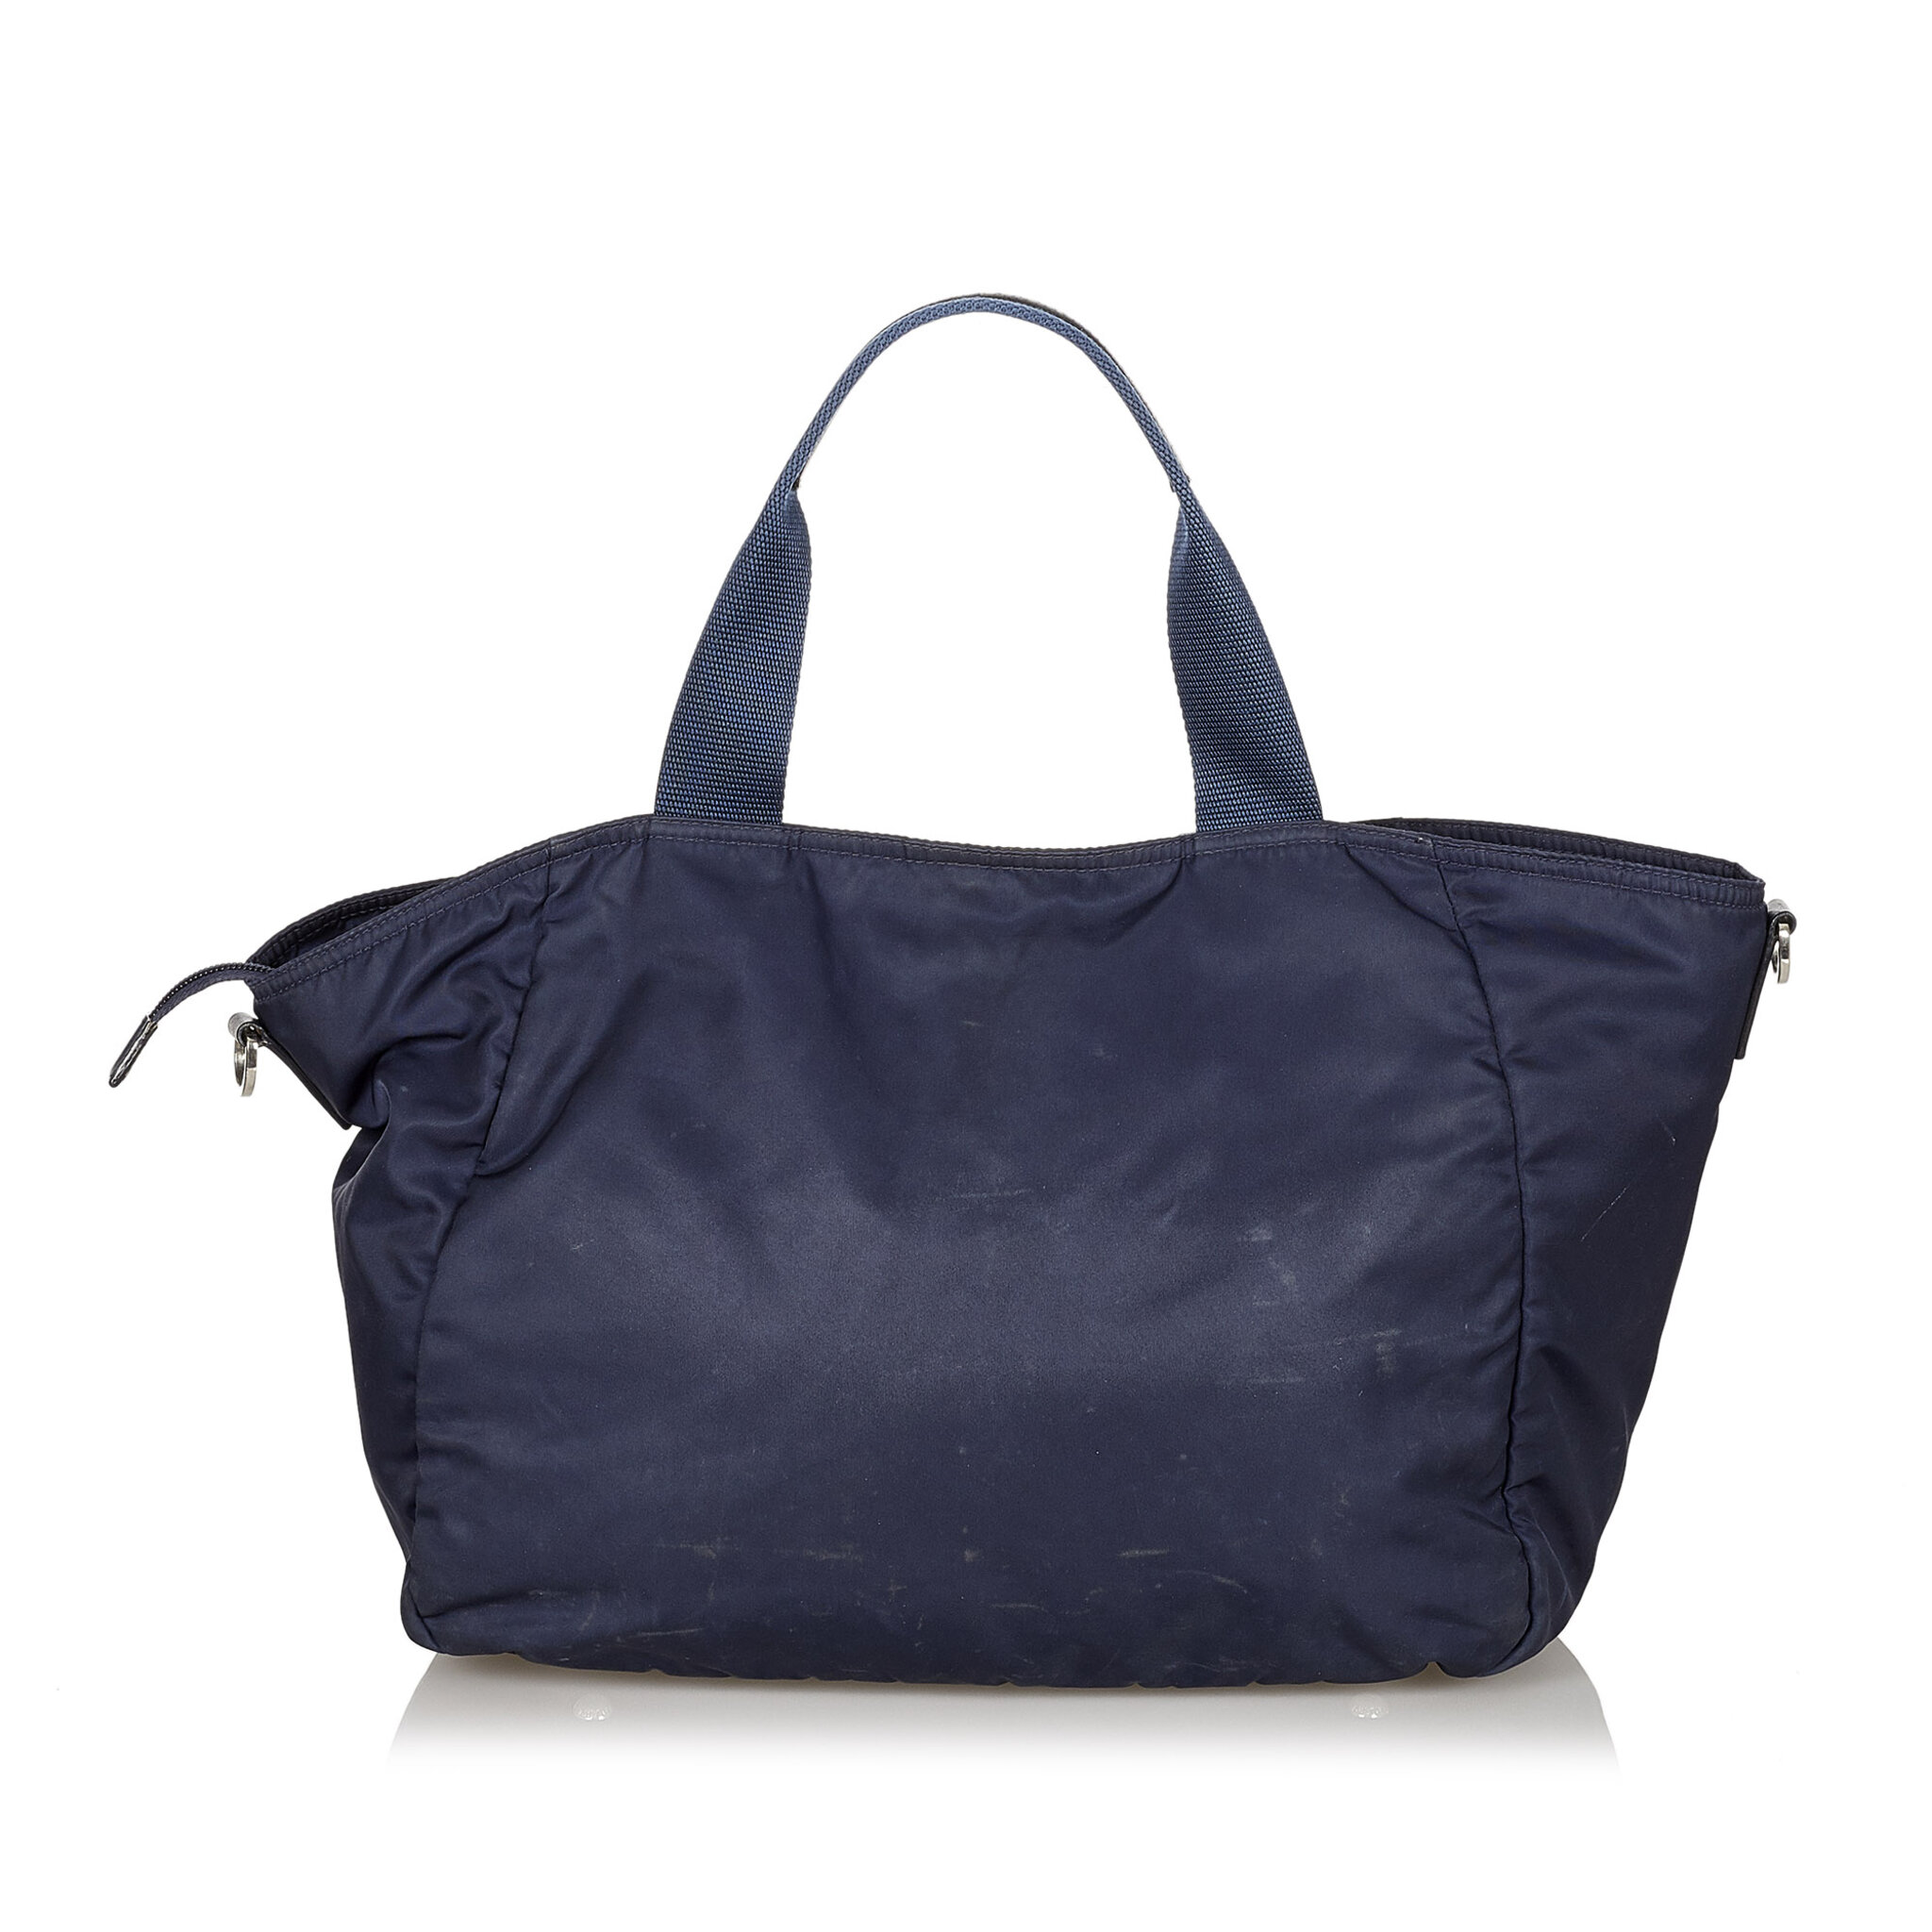 Prada Tessuto Travel Bag, ONESIZE, midnight blue